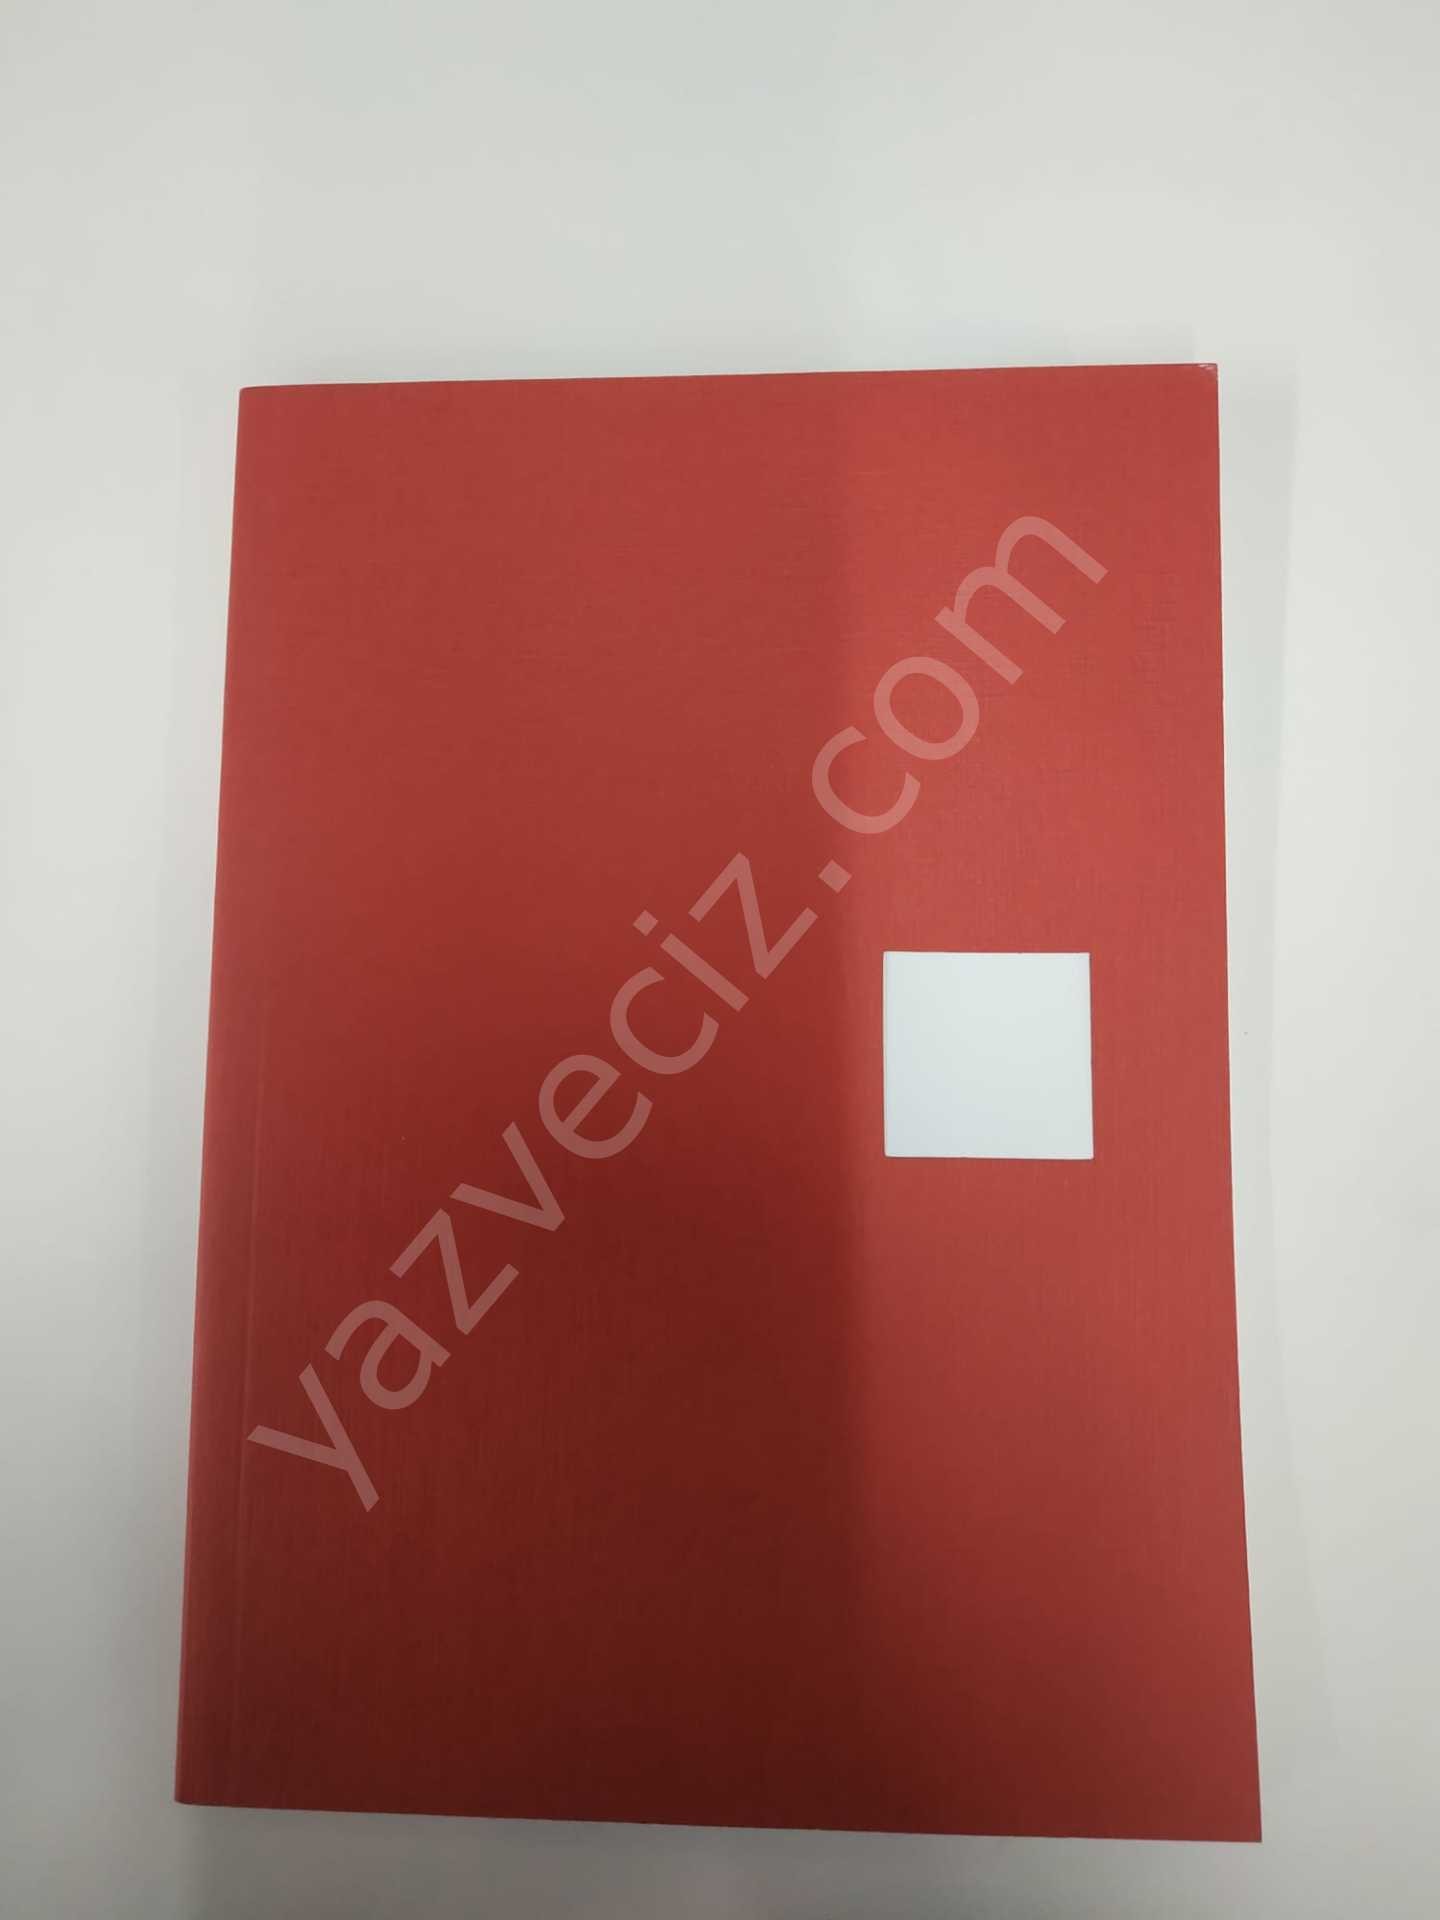 10*15 Fabriano düz sayfa notebook- kırmızı